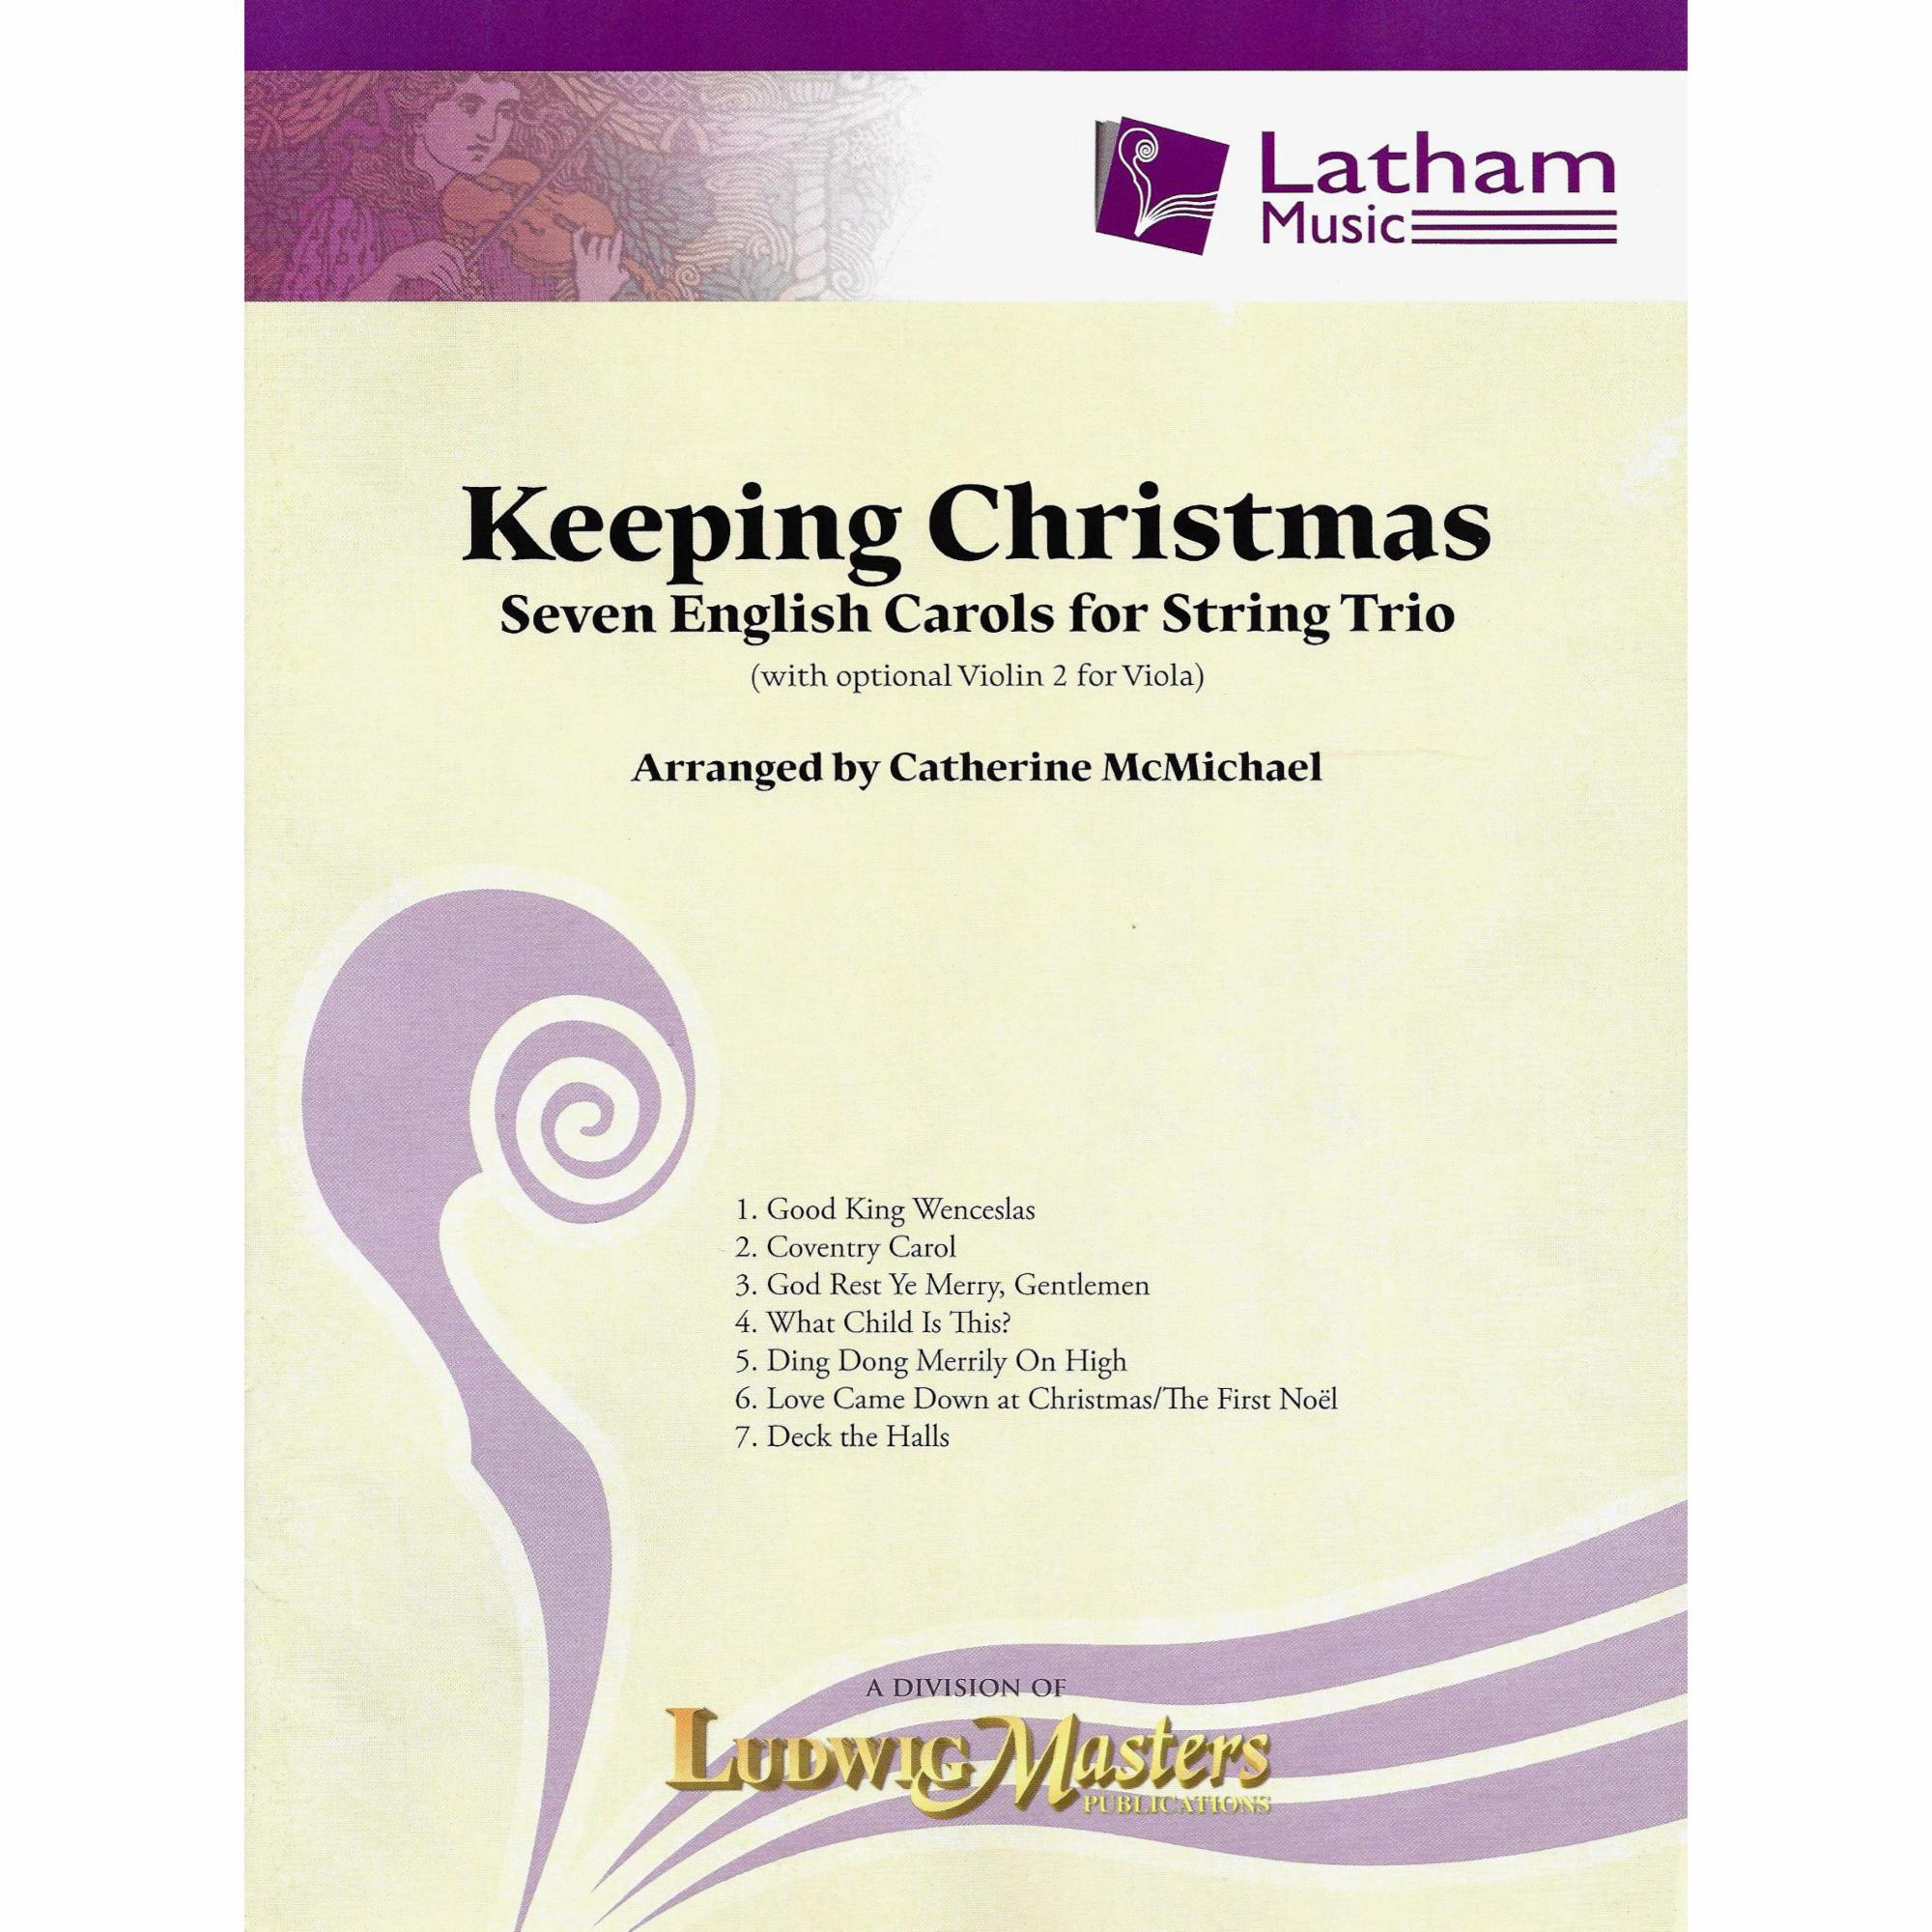 Keeping Christmas for String Trio